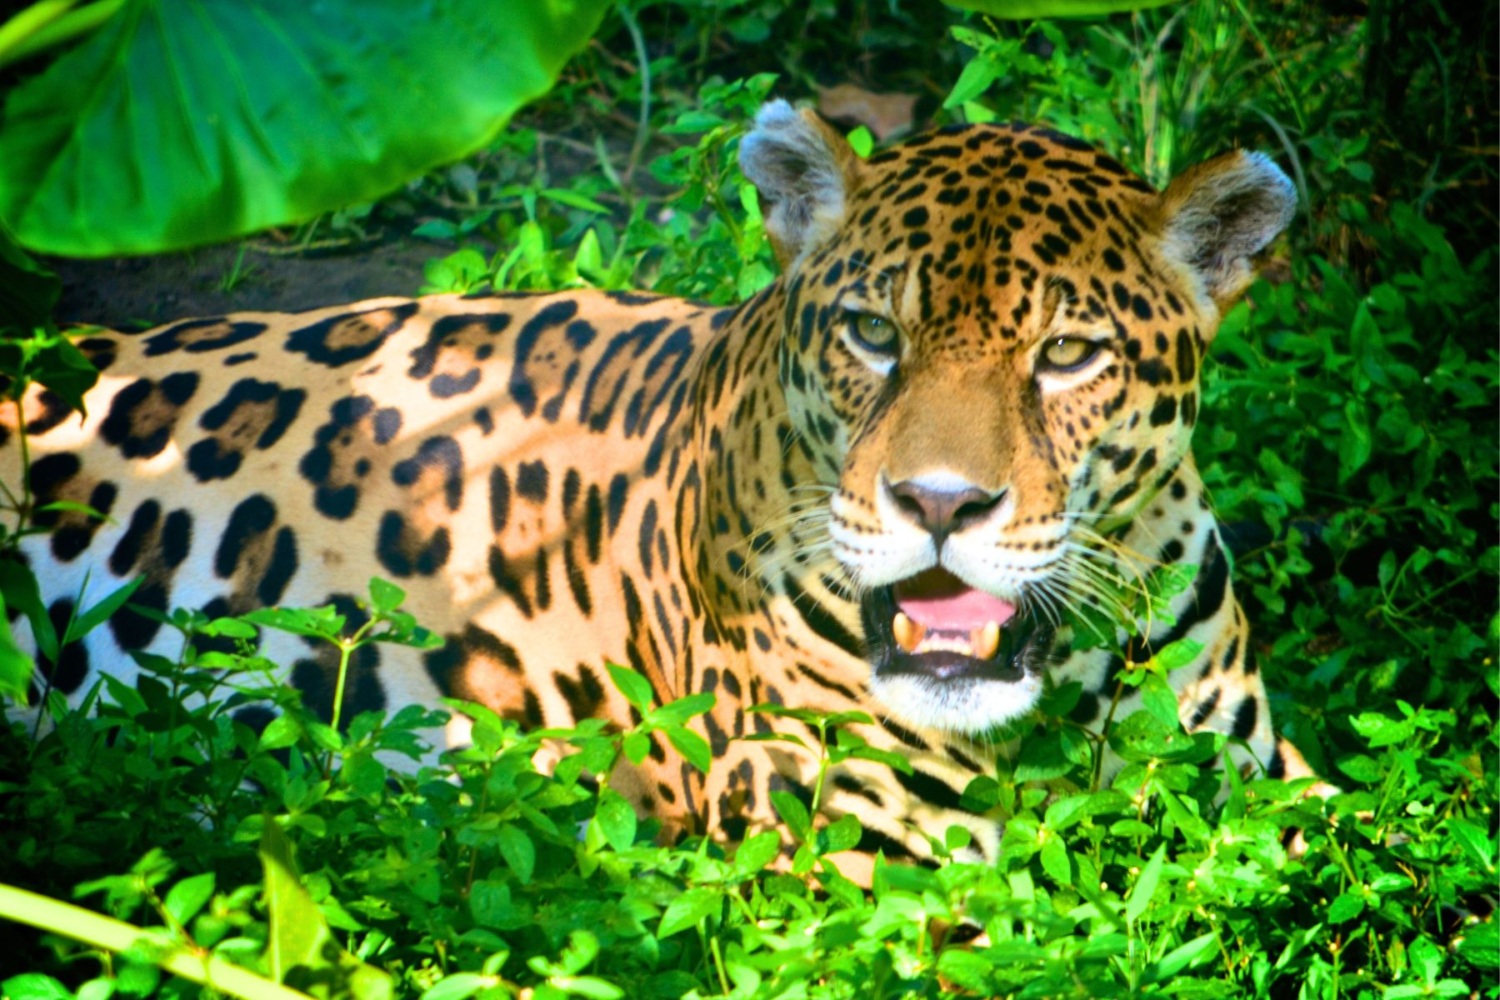 A Jaguar in Brazil